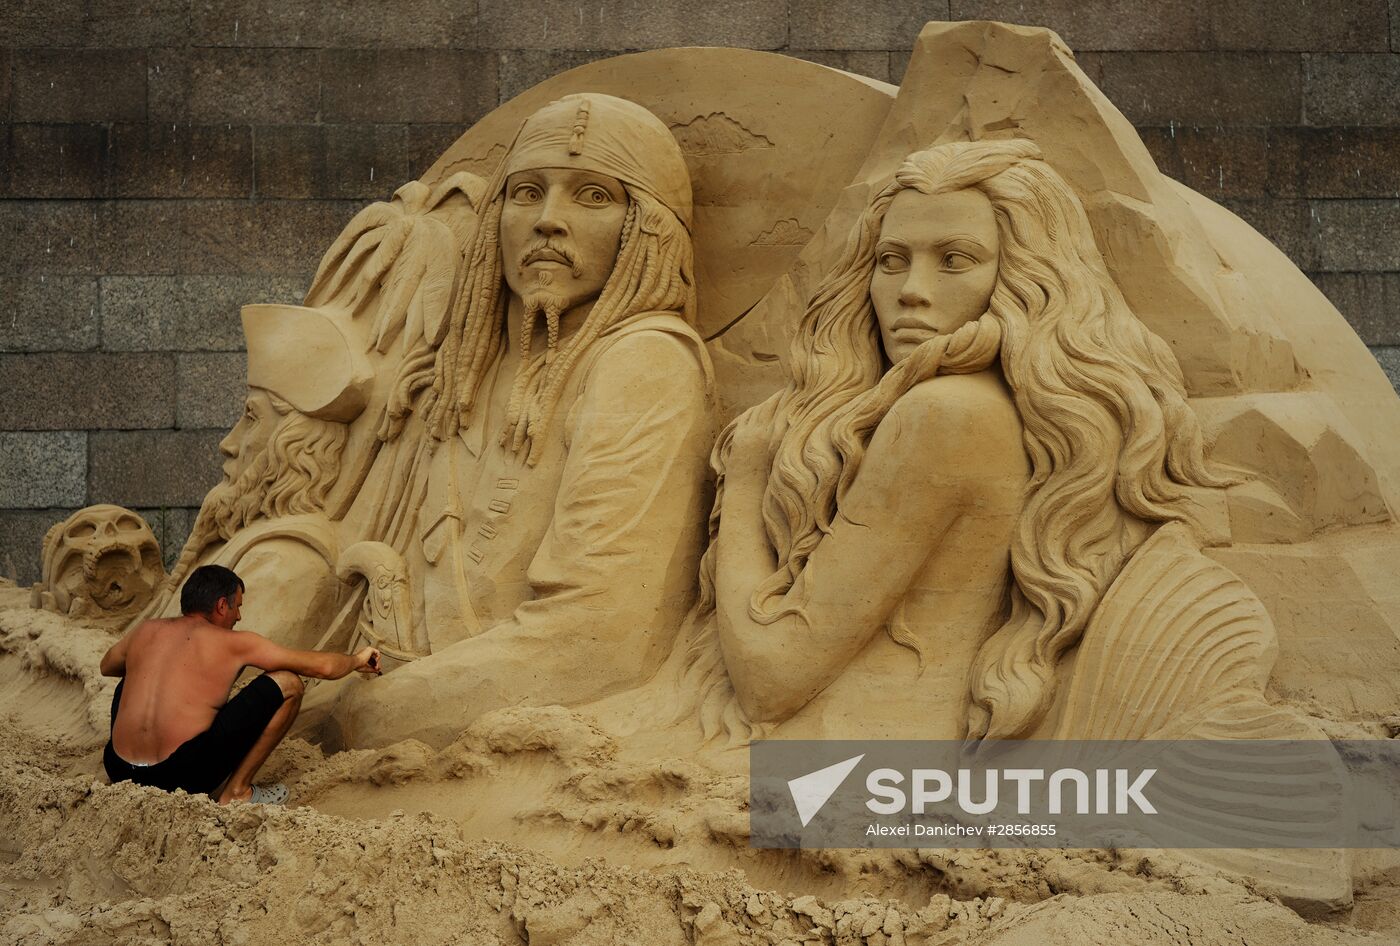 Festival of Sand Sculptures in St. Petersburg